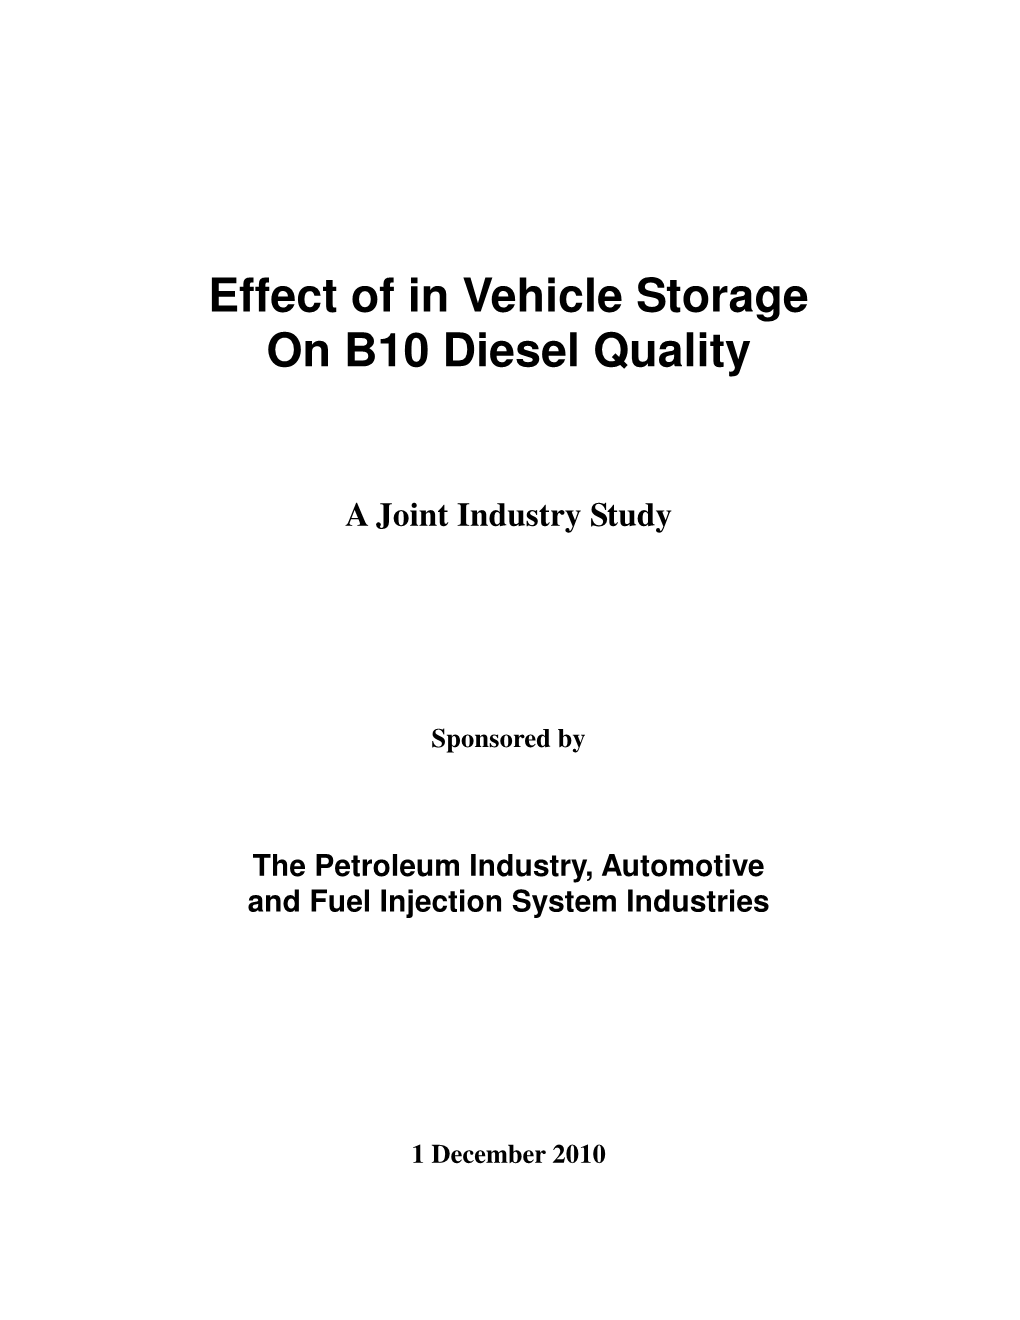 Effect of in Vehicle Storage on B10 Diesel Quality